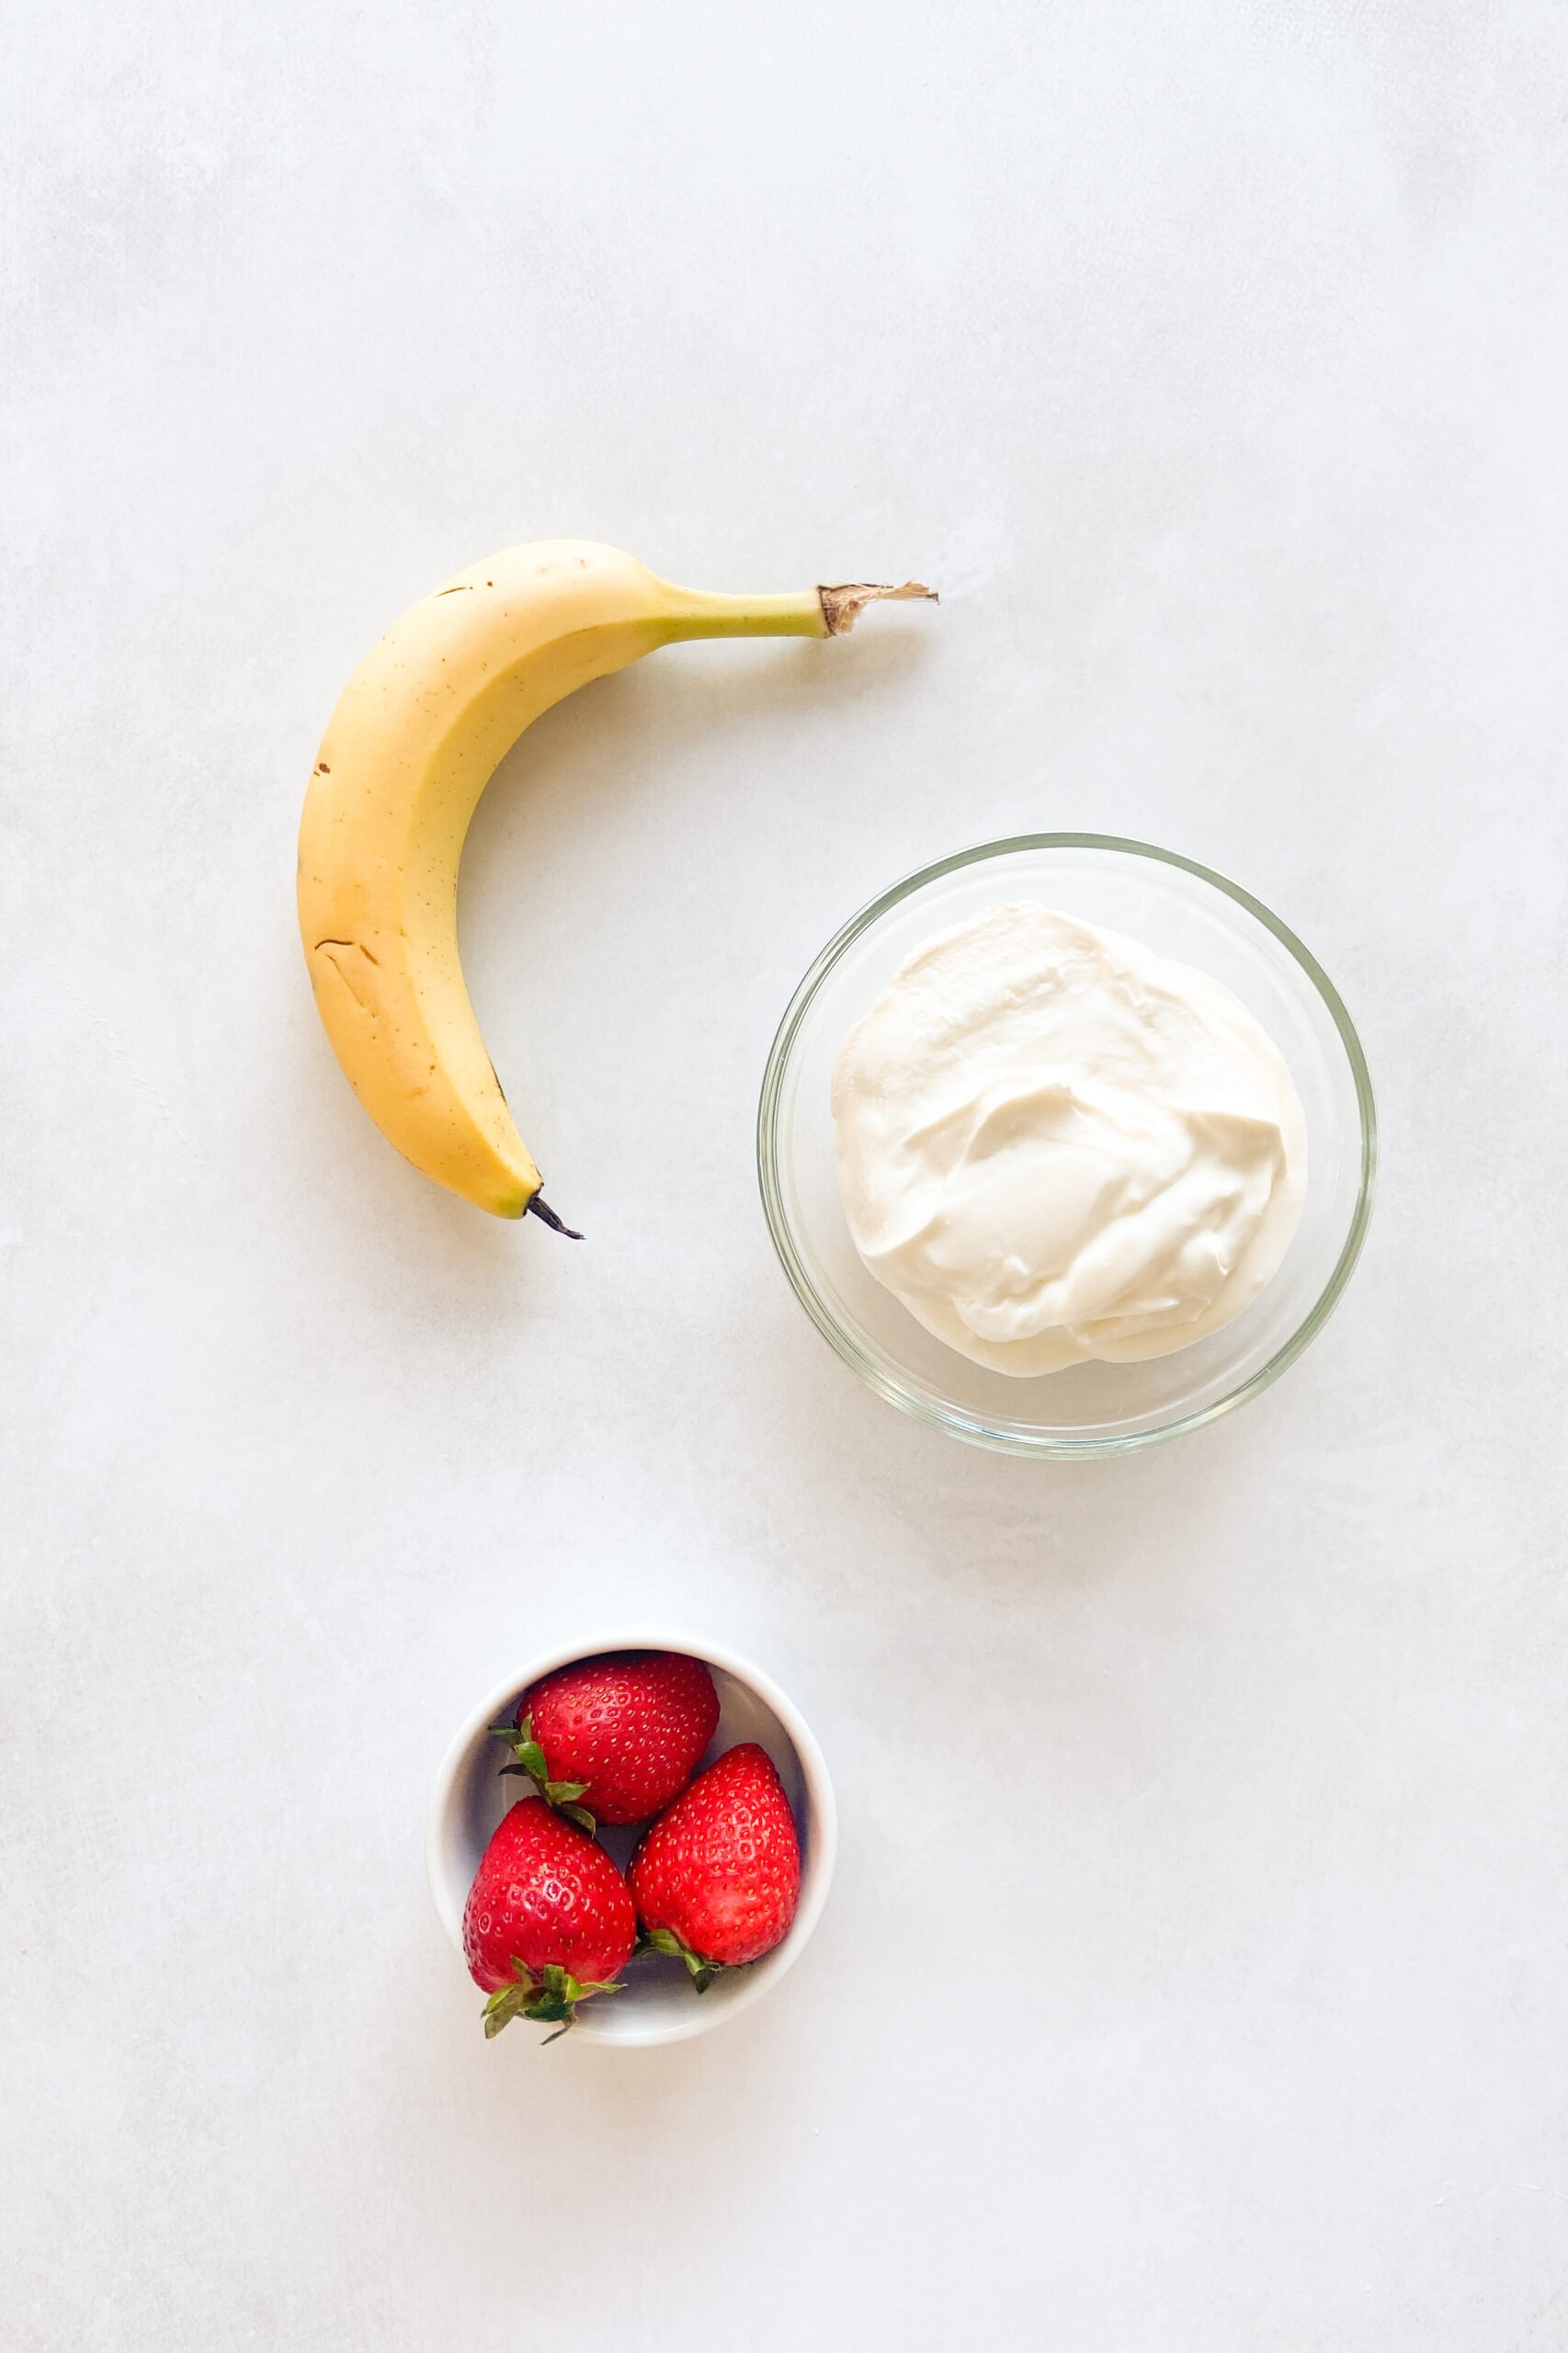 Ingredients to make strawberry banana yogurt melts. See recipe card for detailed ingredients.